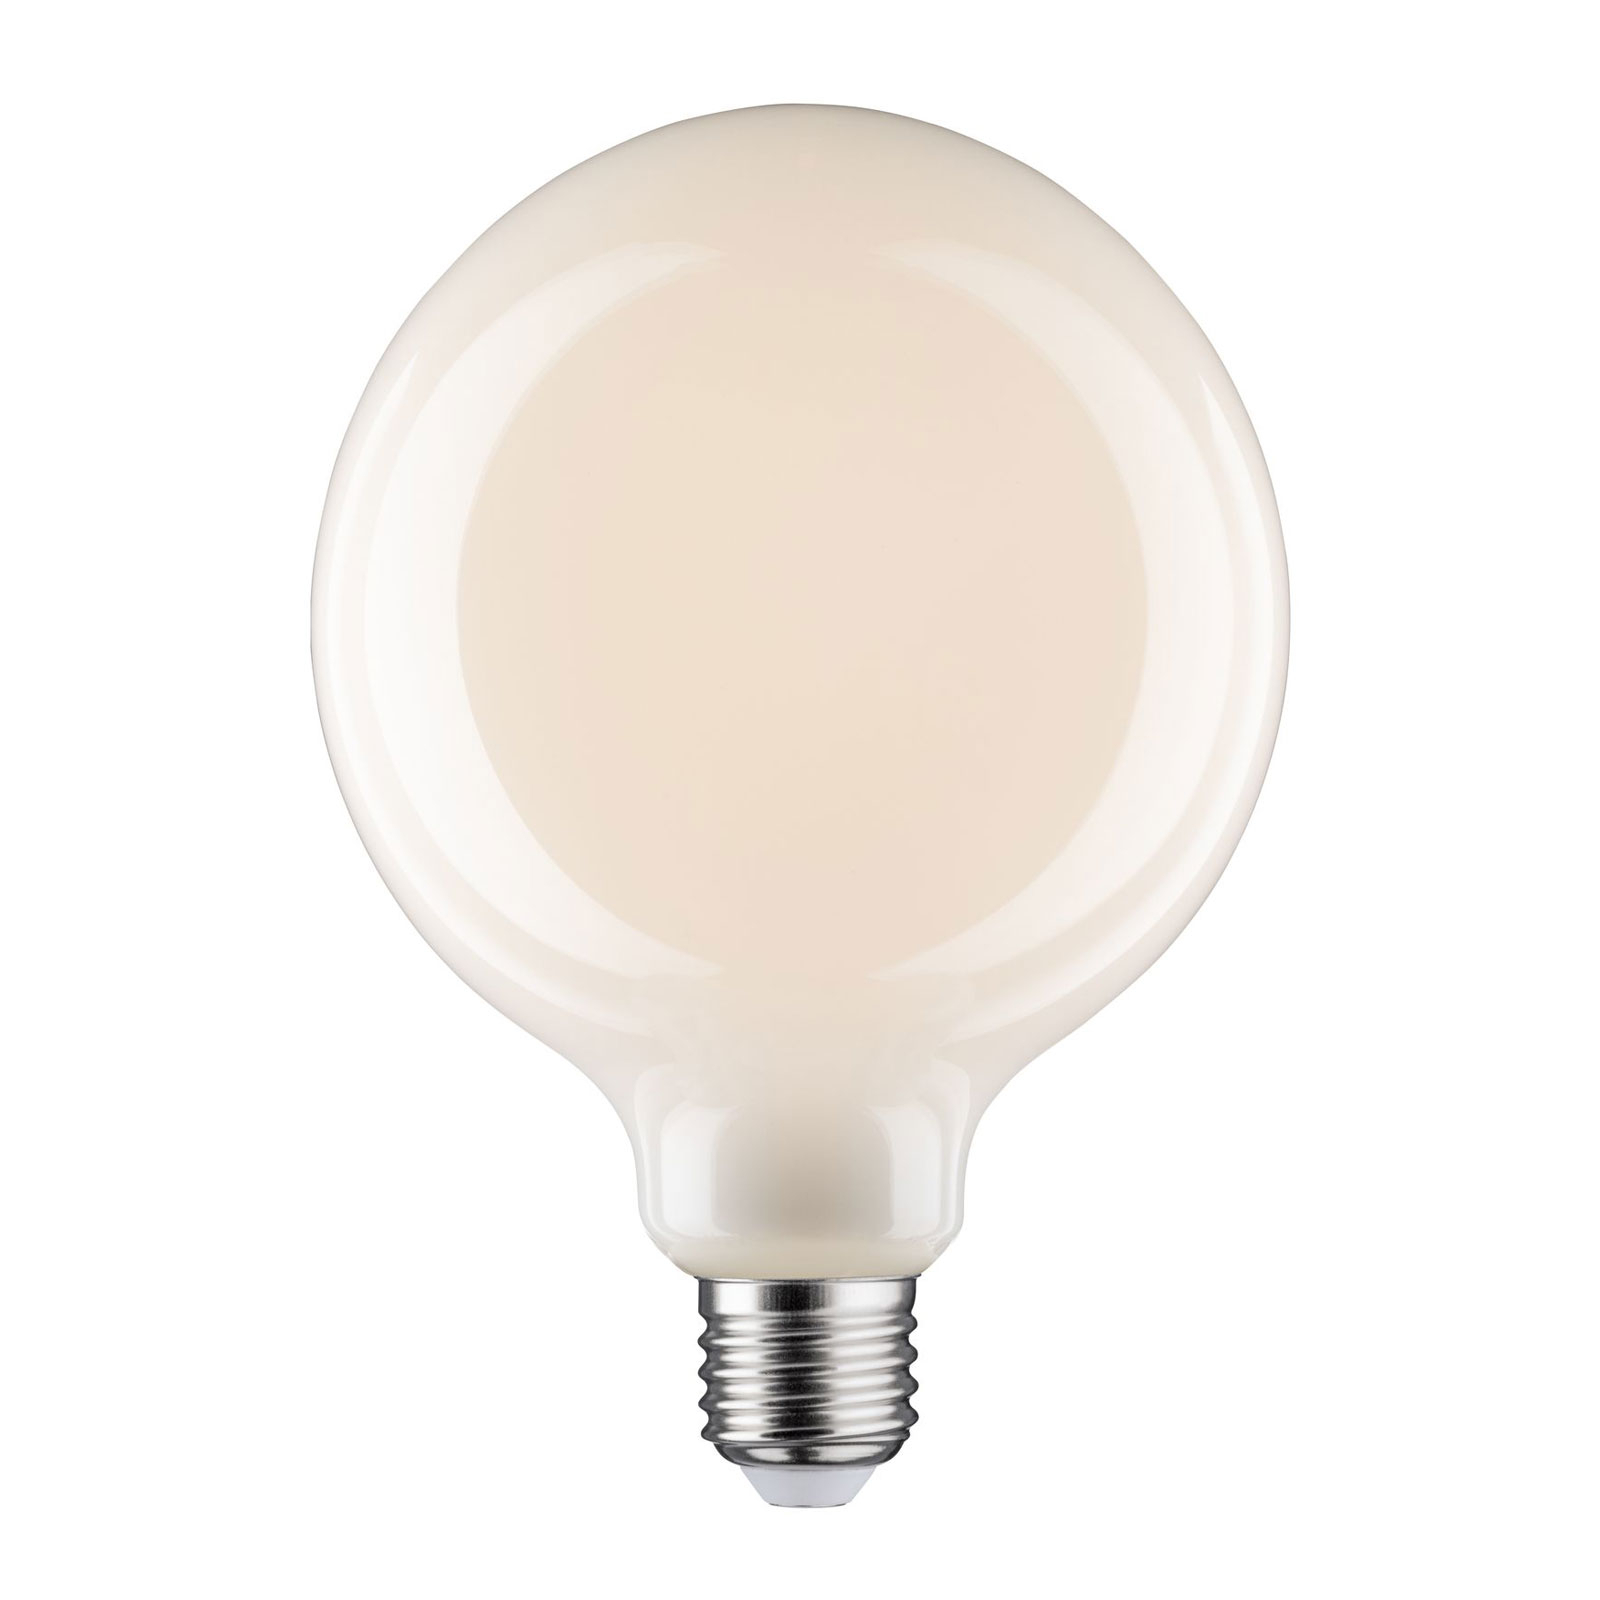 LED stiklinė lempa E27 6W G125 Fil 2 700K opalinė lempa, kurią galima